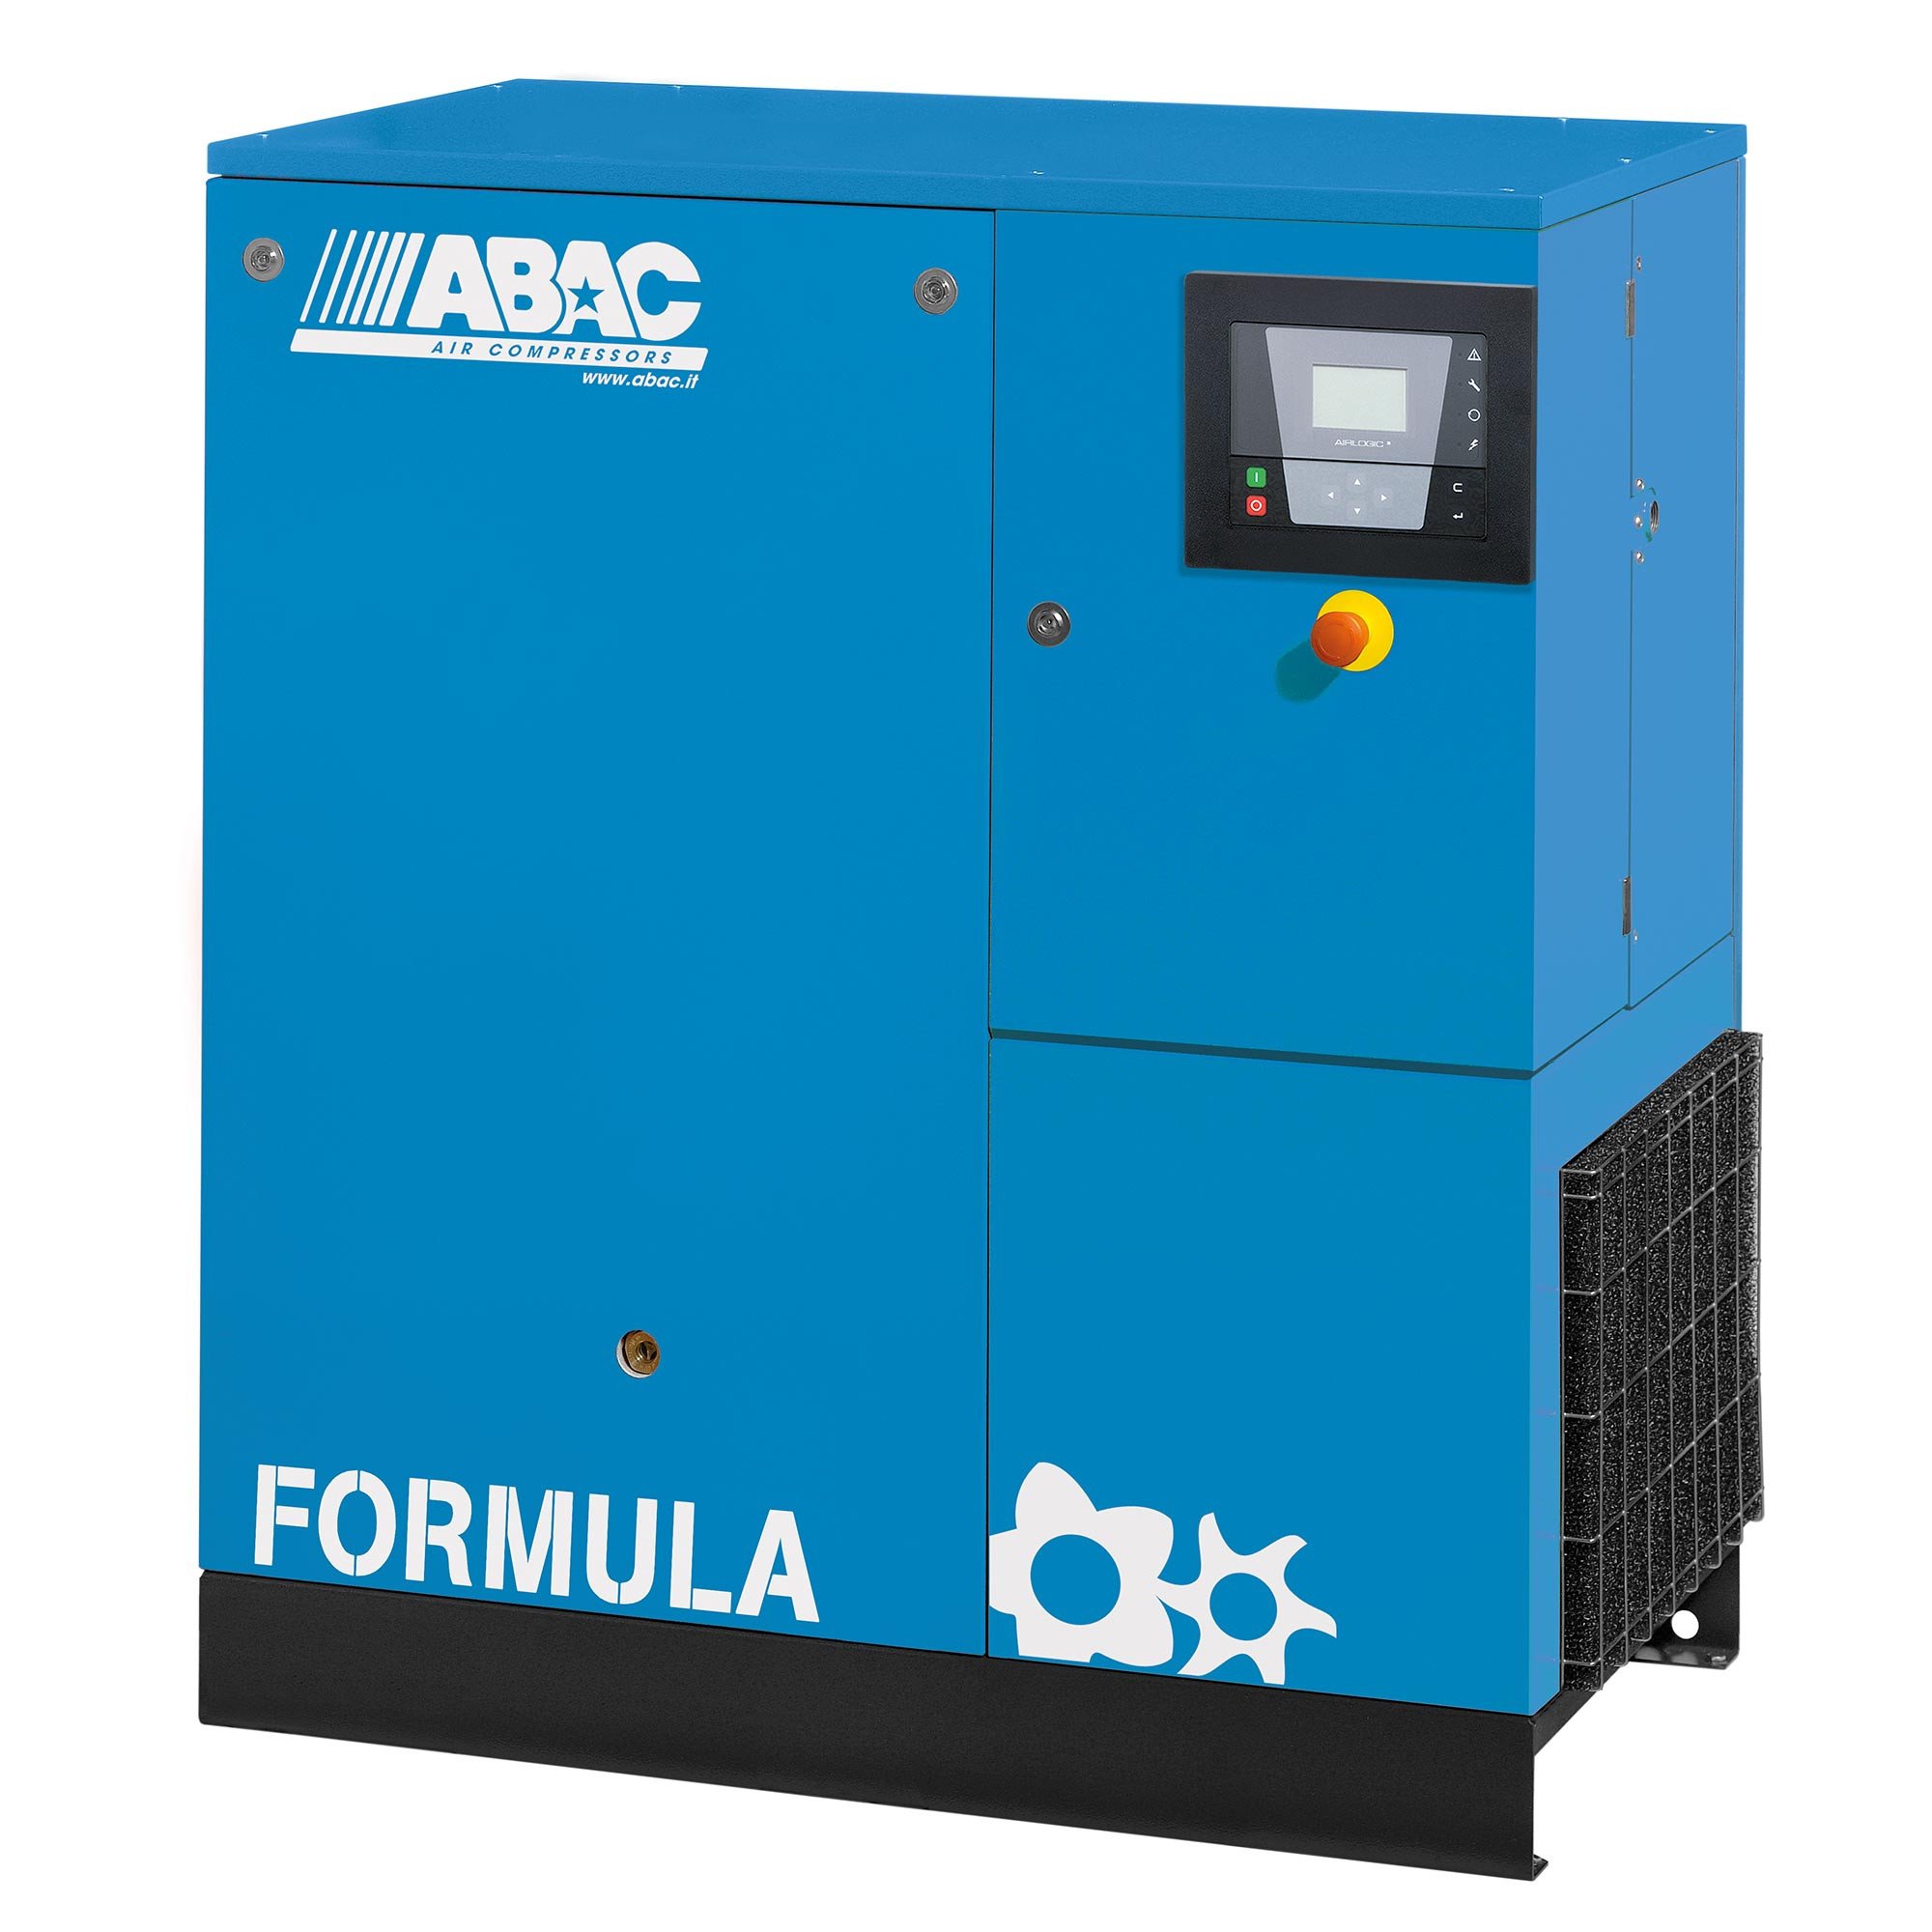 ABAC公式7.5千瓦固定速度旋转螺杆空气压缩机——基本单位